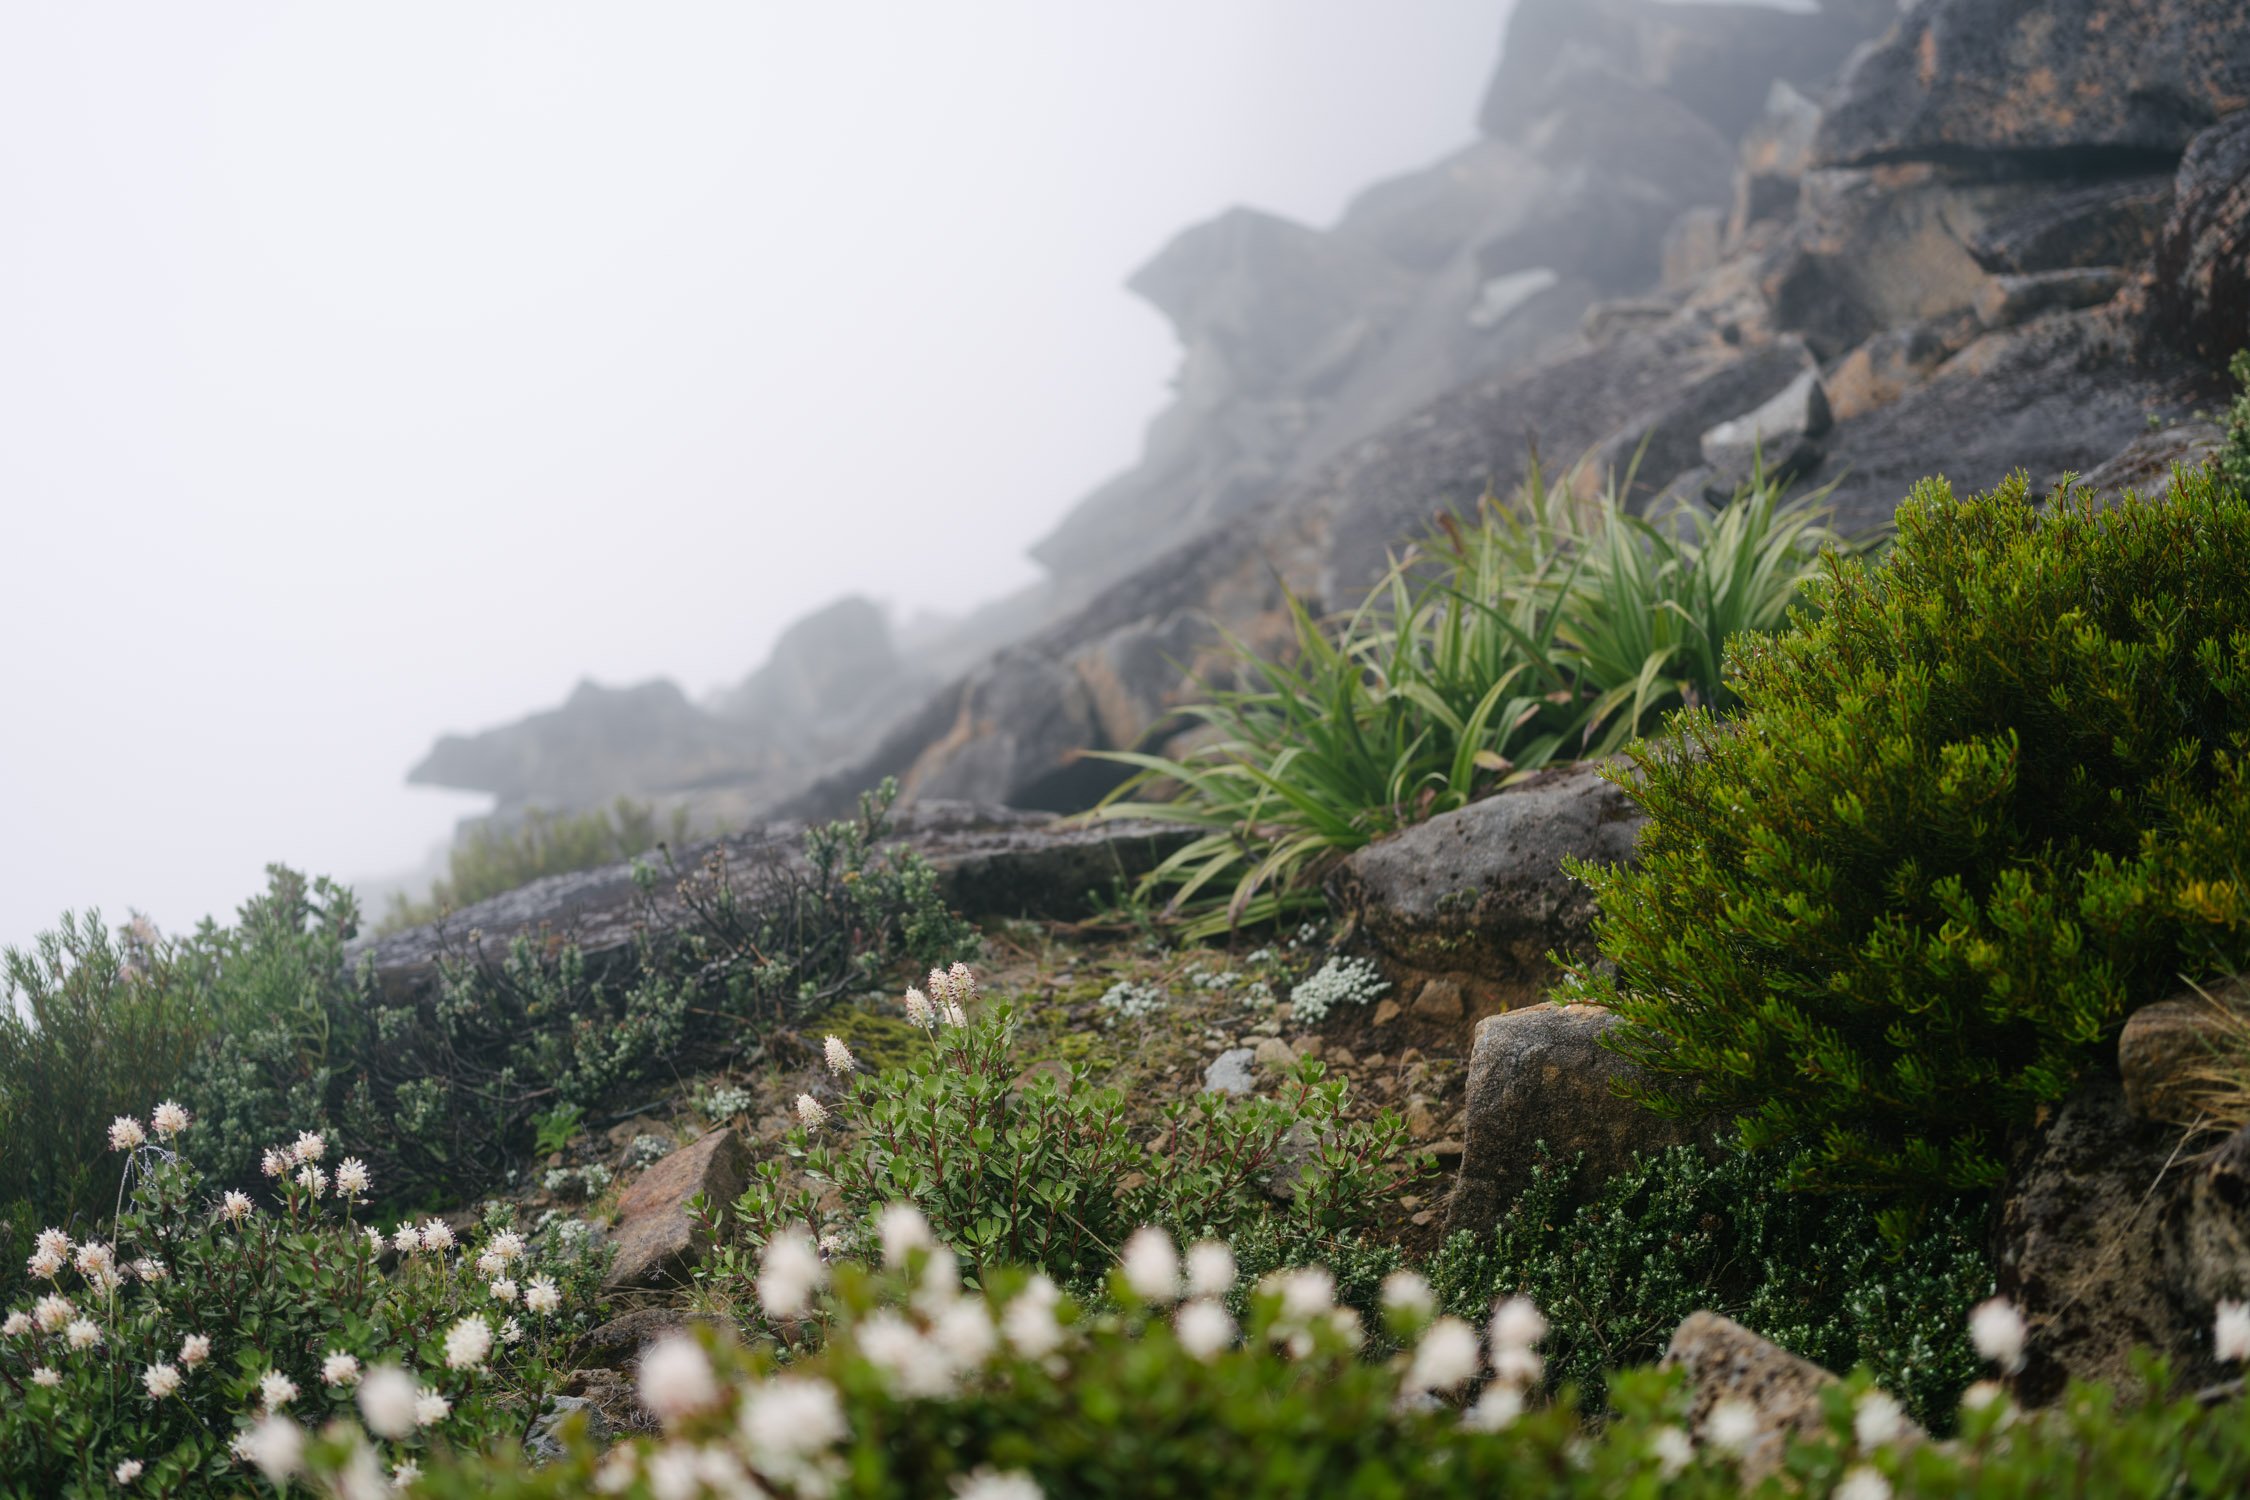 Flowers on a windy, wet mountain